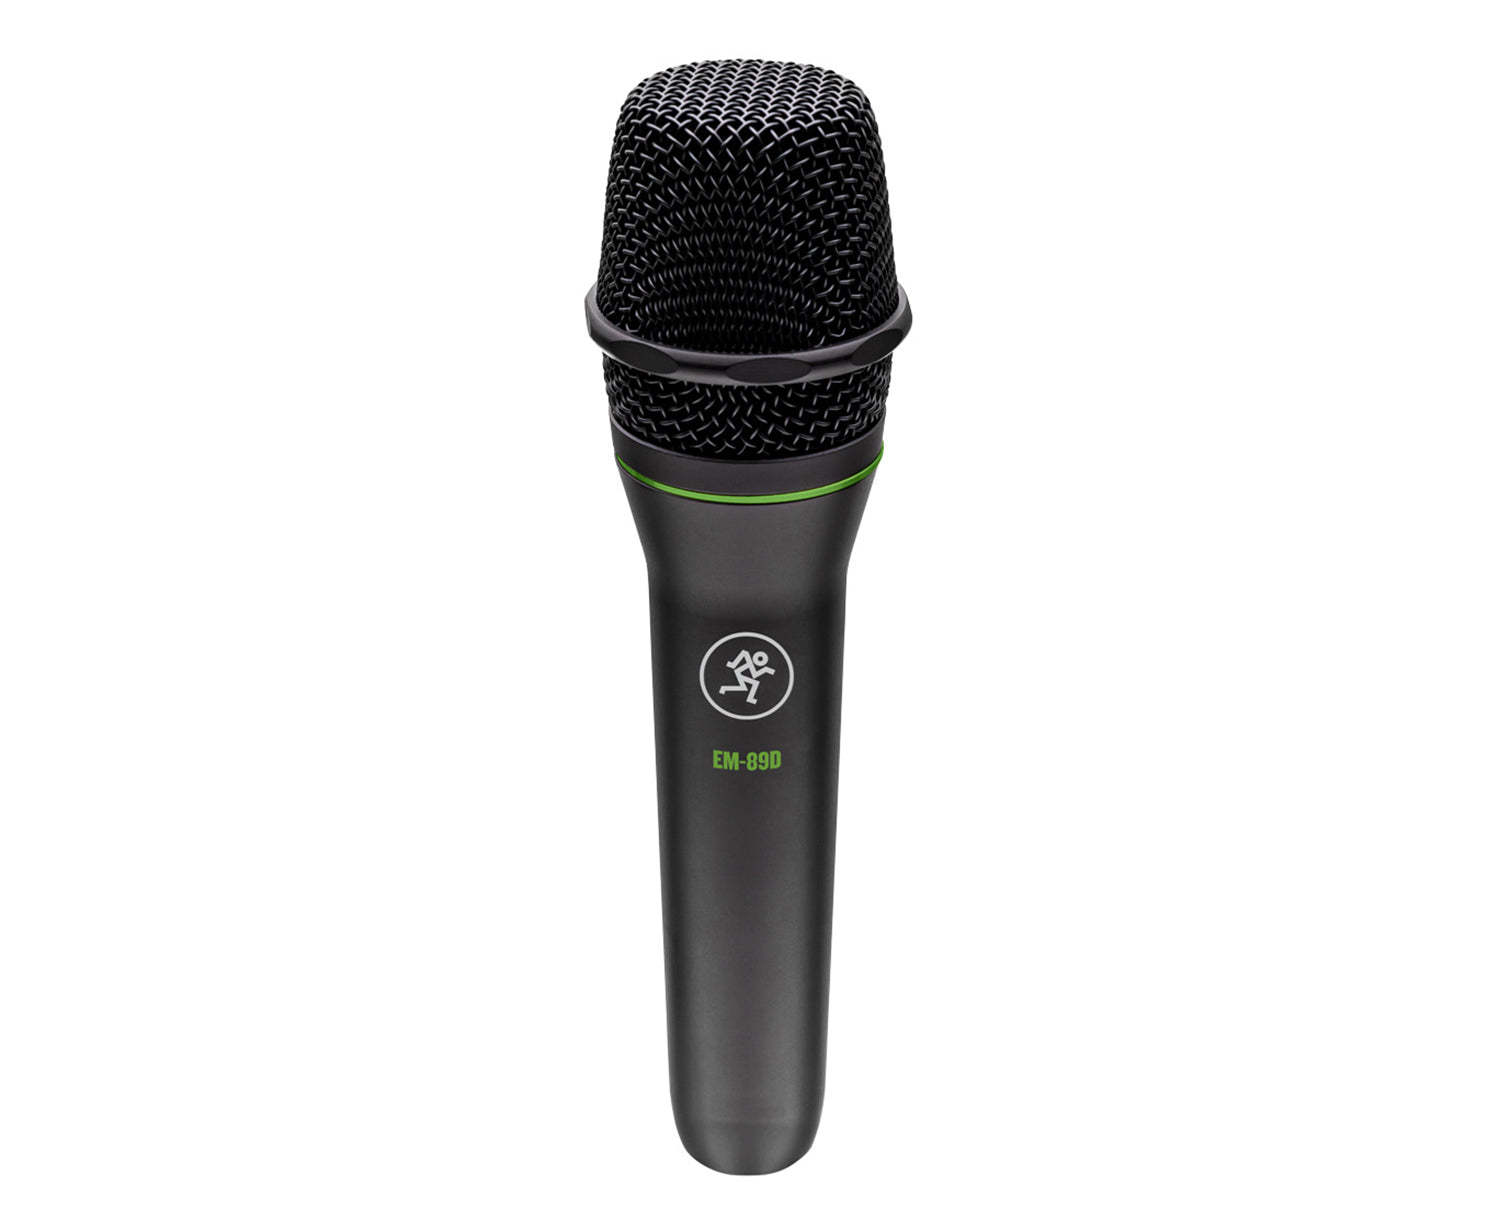 Mackie EM-89D Cardioid Dynamic Vocal Microphone by Mackie